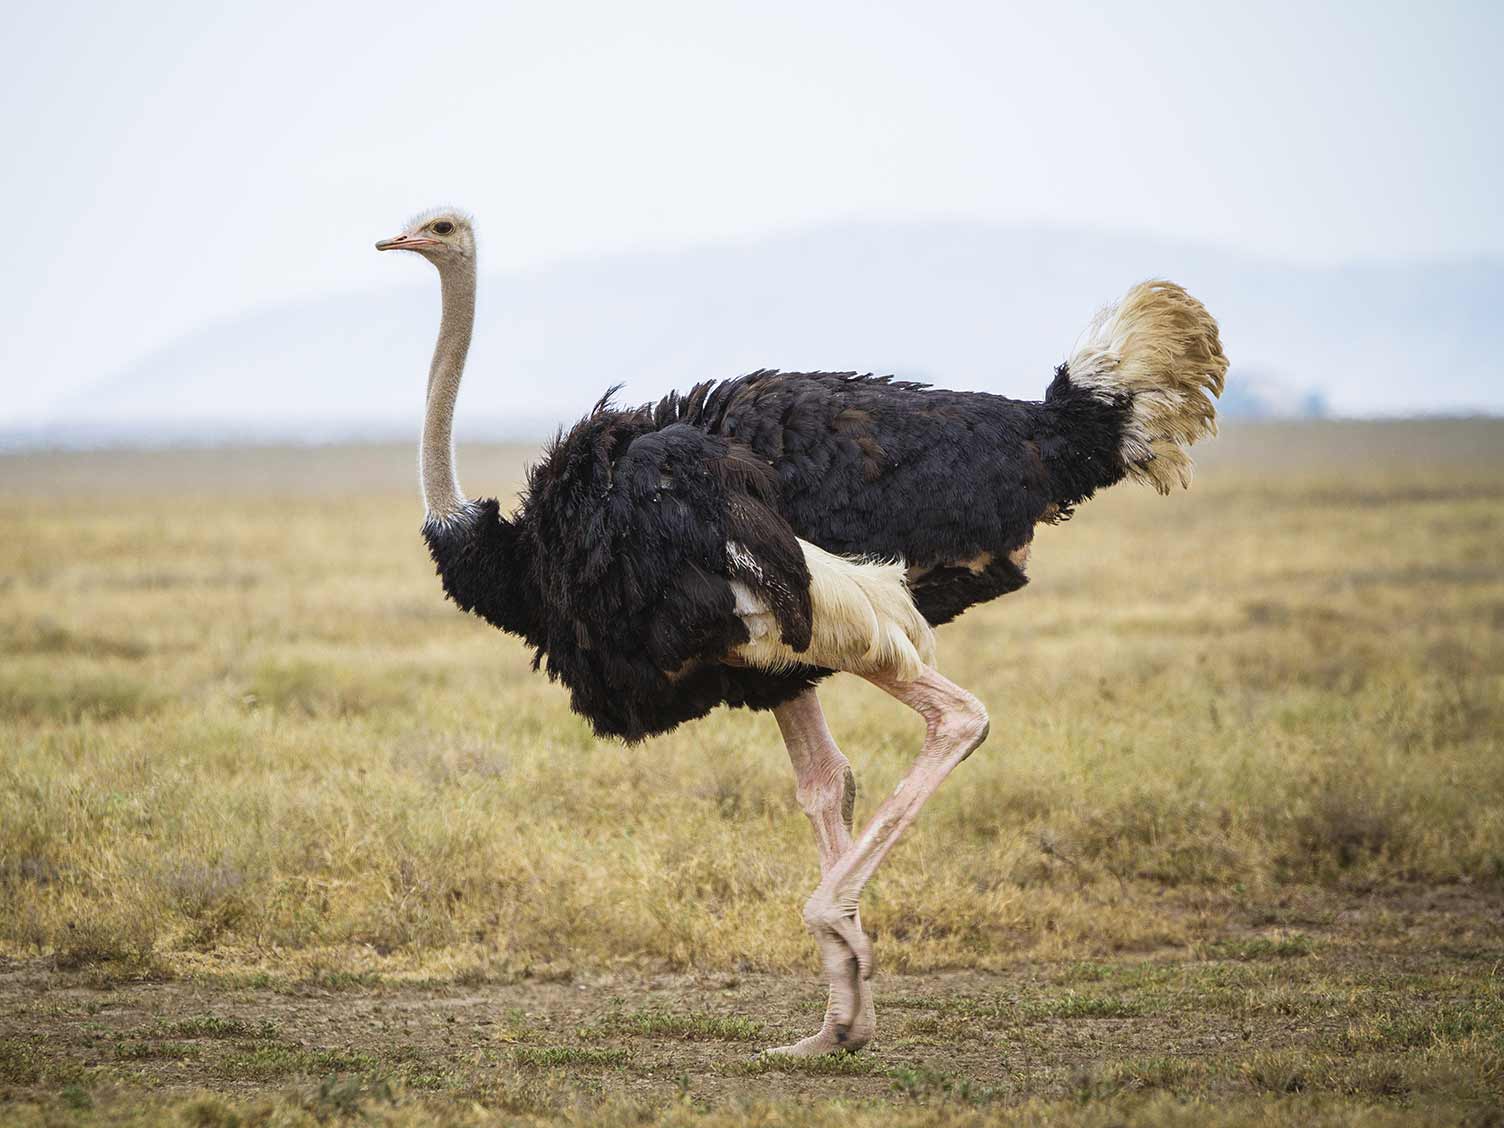 The ostrich